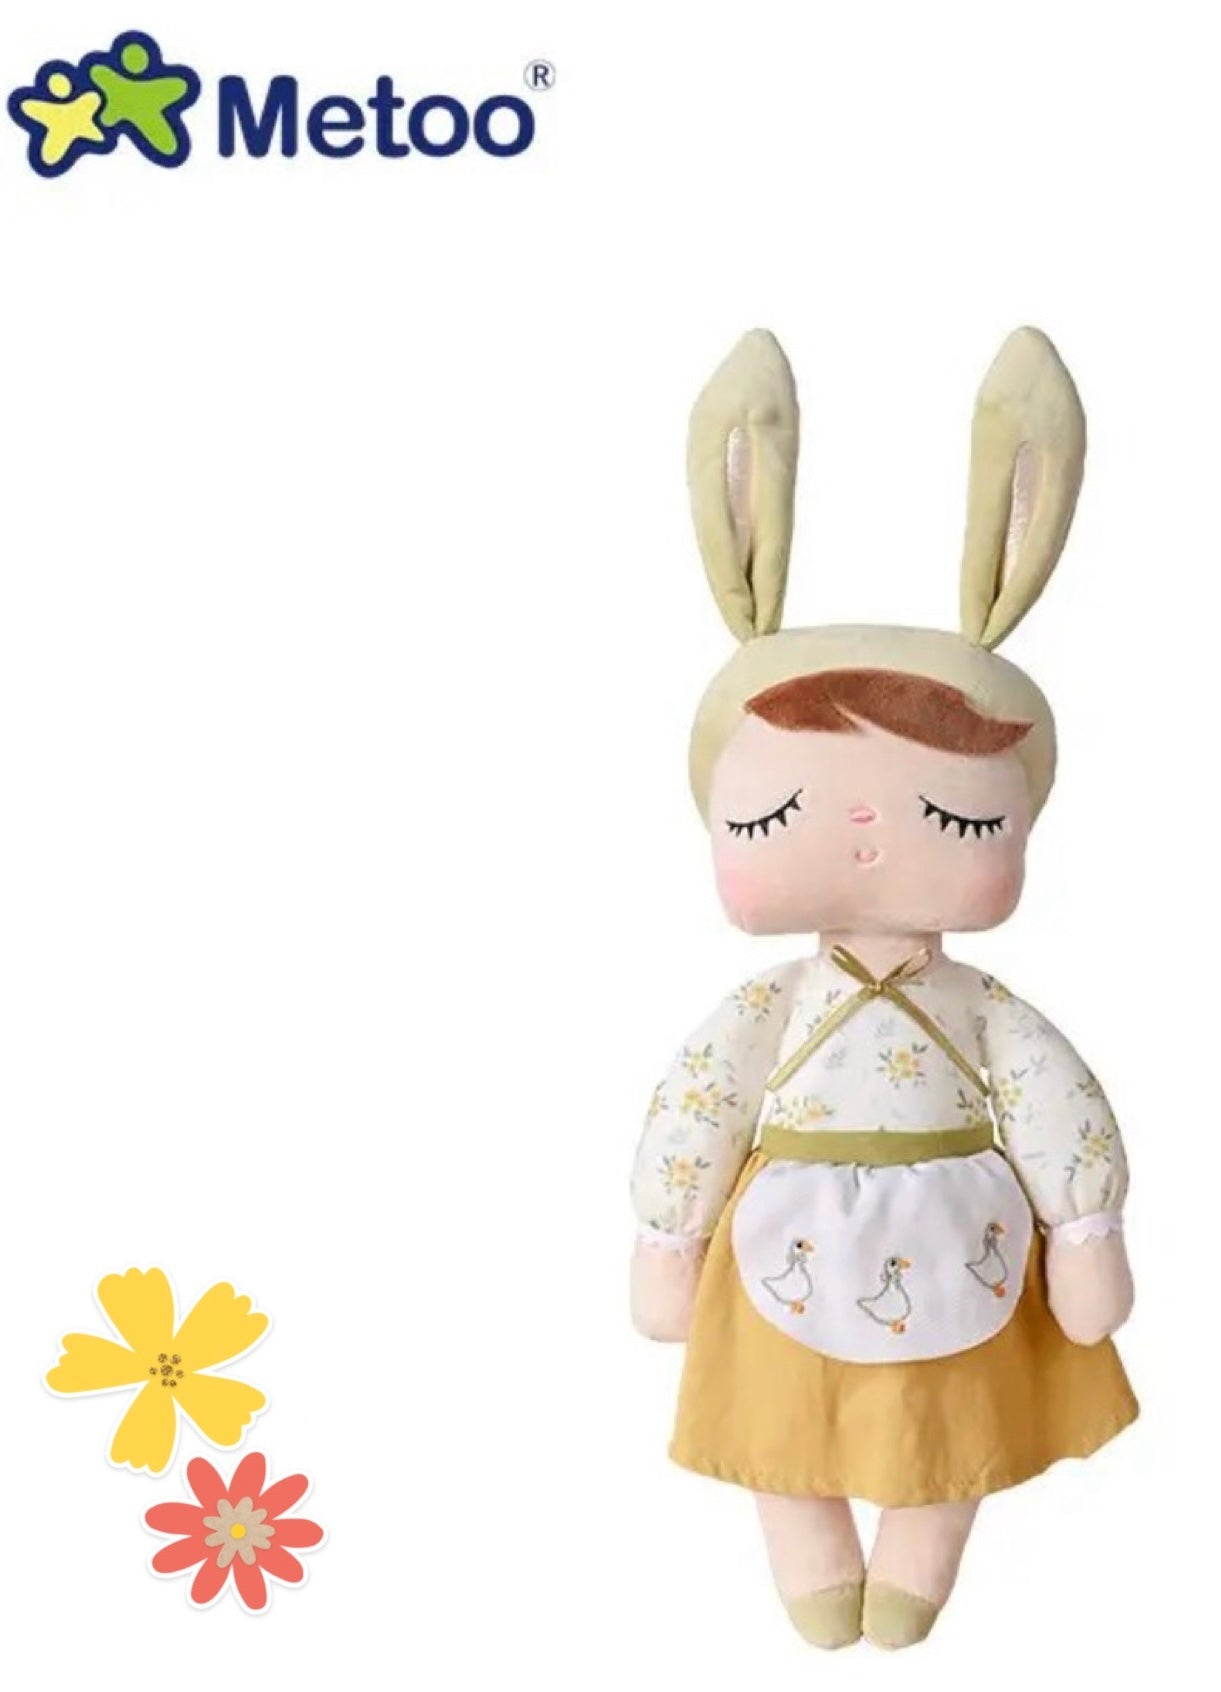 Metoo Plush Doll - Spring 45cm